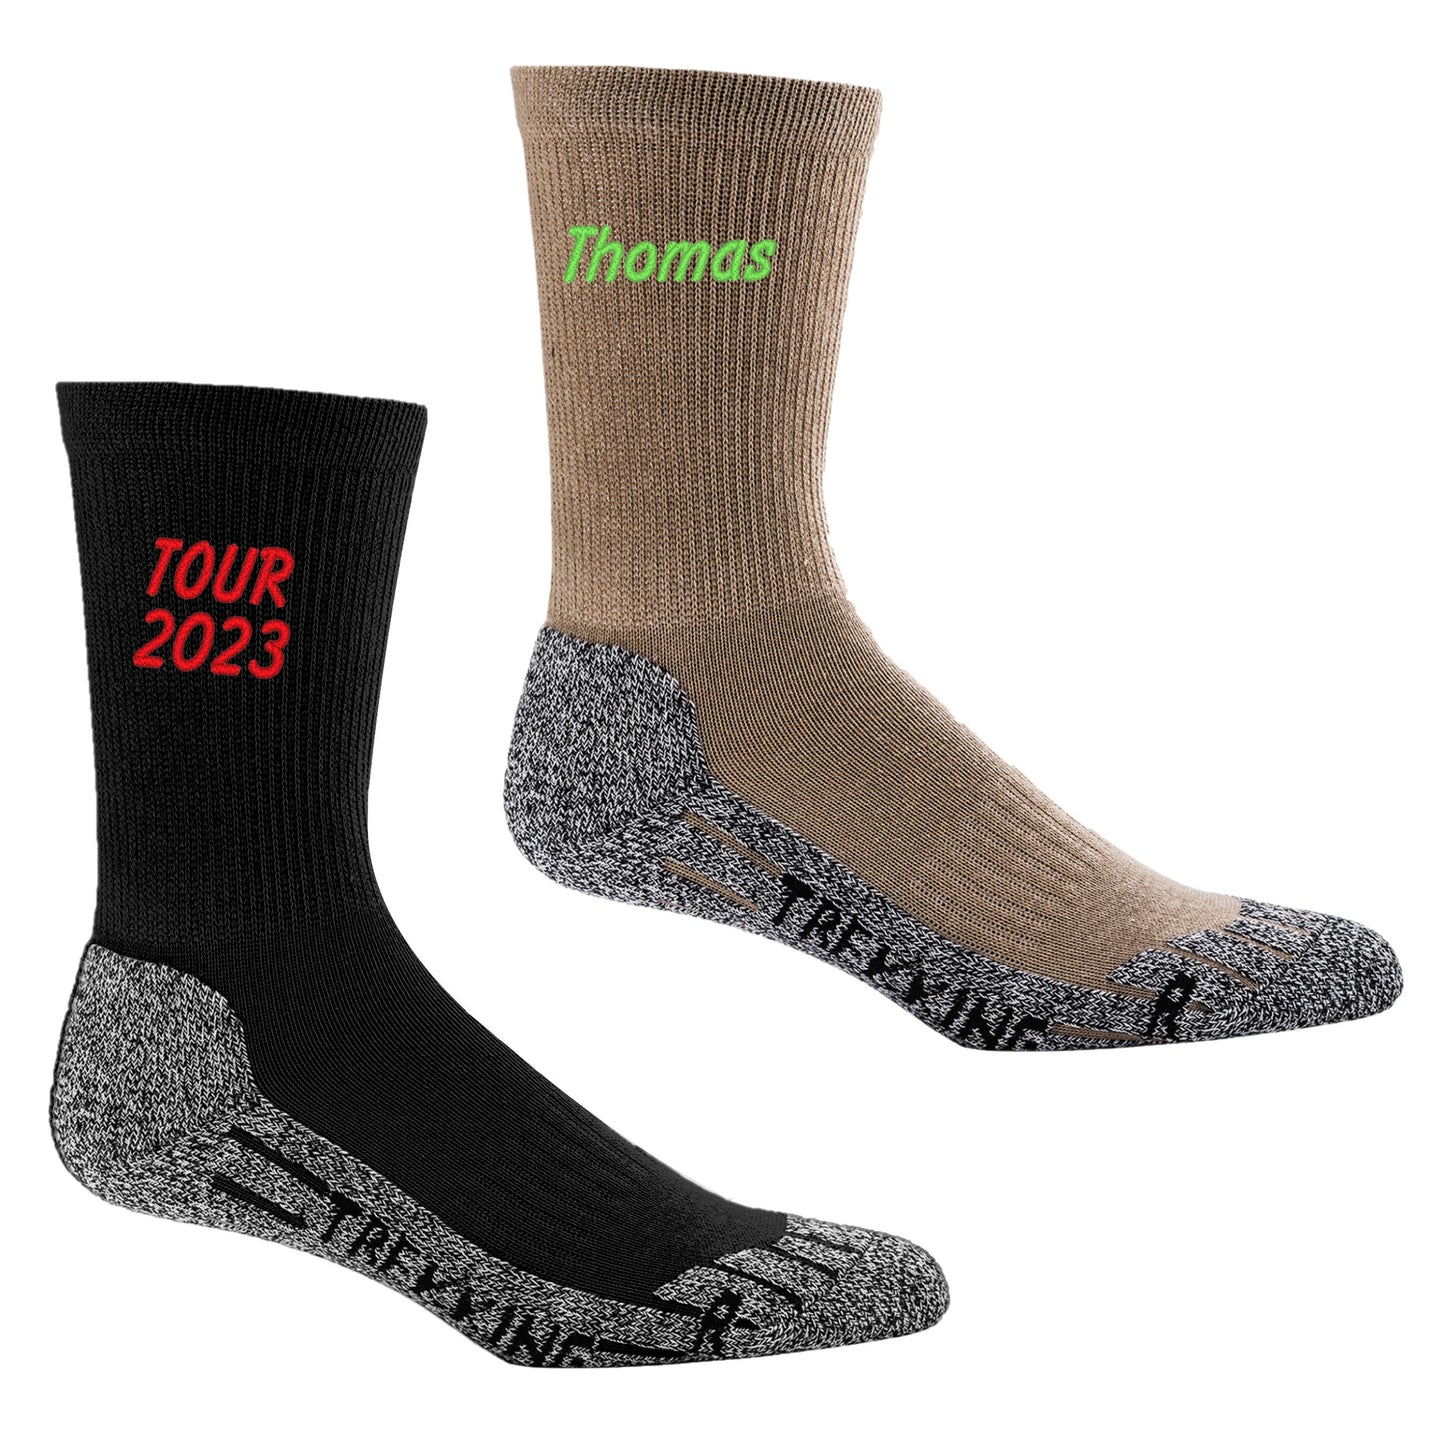 Coolmax Trekking-Socken mit Namen bestickt